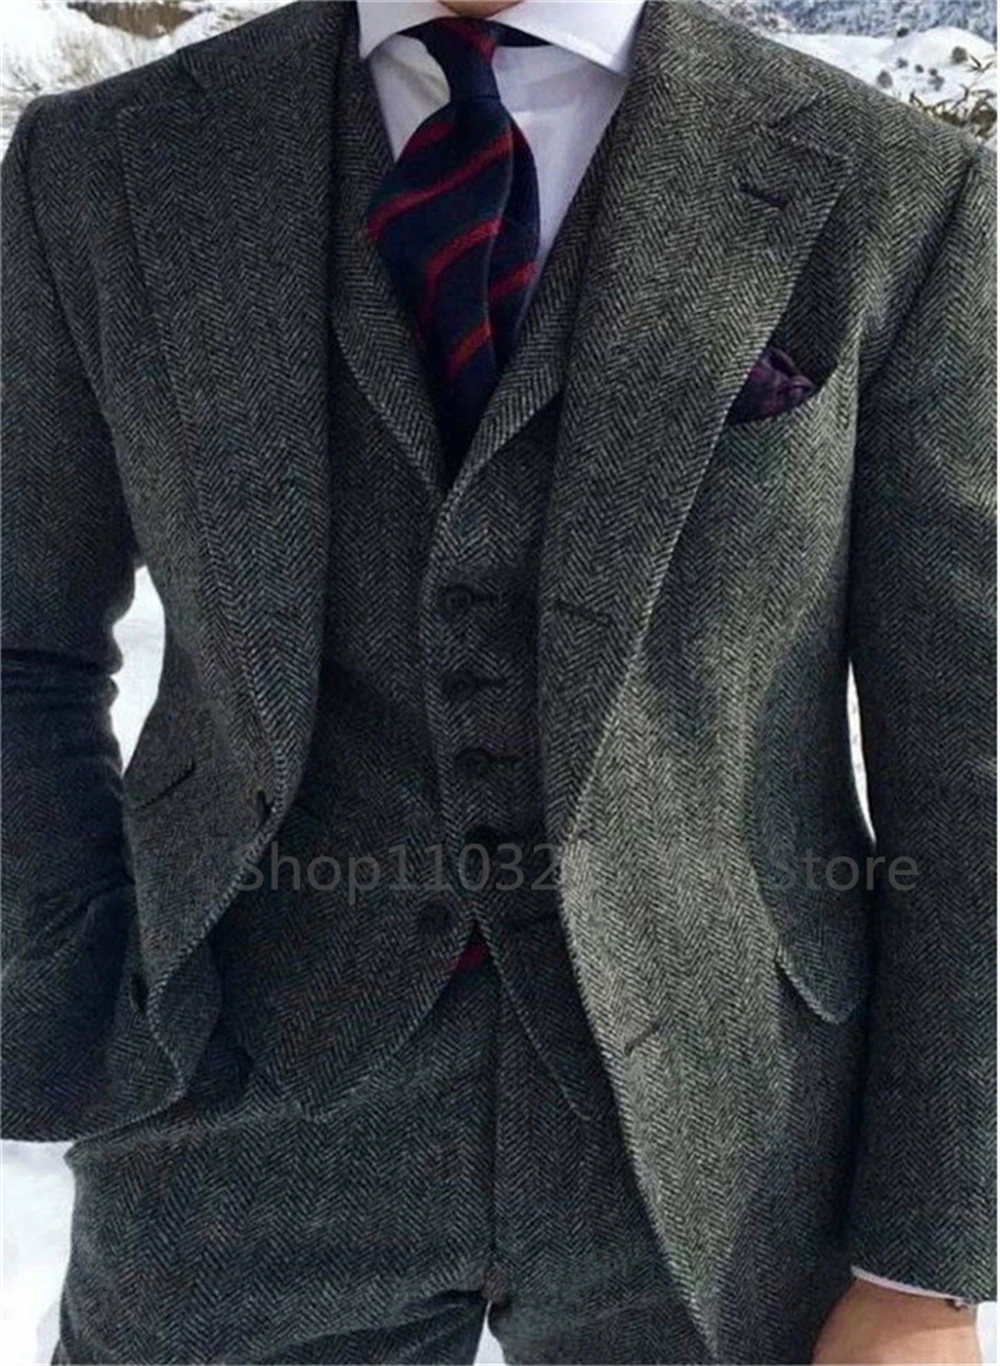 Gray Herringbone Winter Suit for Men Wool Tweed Slim Fit Formal Groom Wedding Tuxedo 3 Piece Sets Business Wedding Male Suits